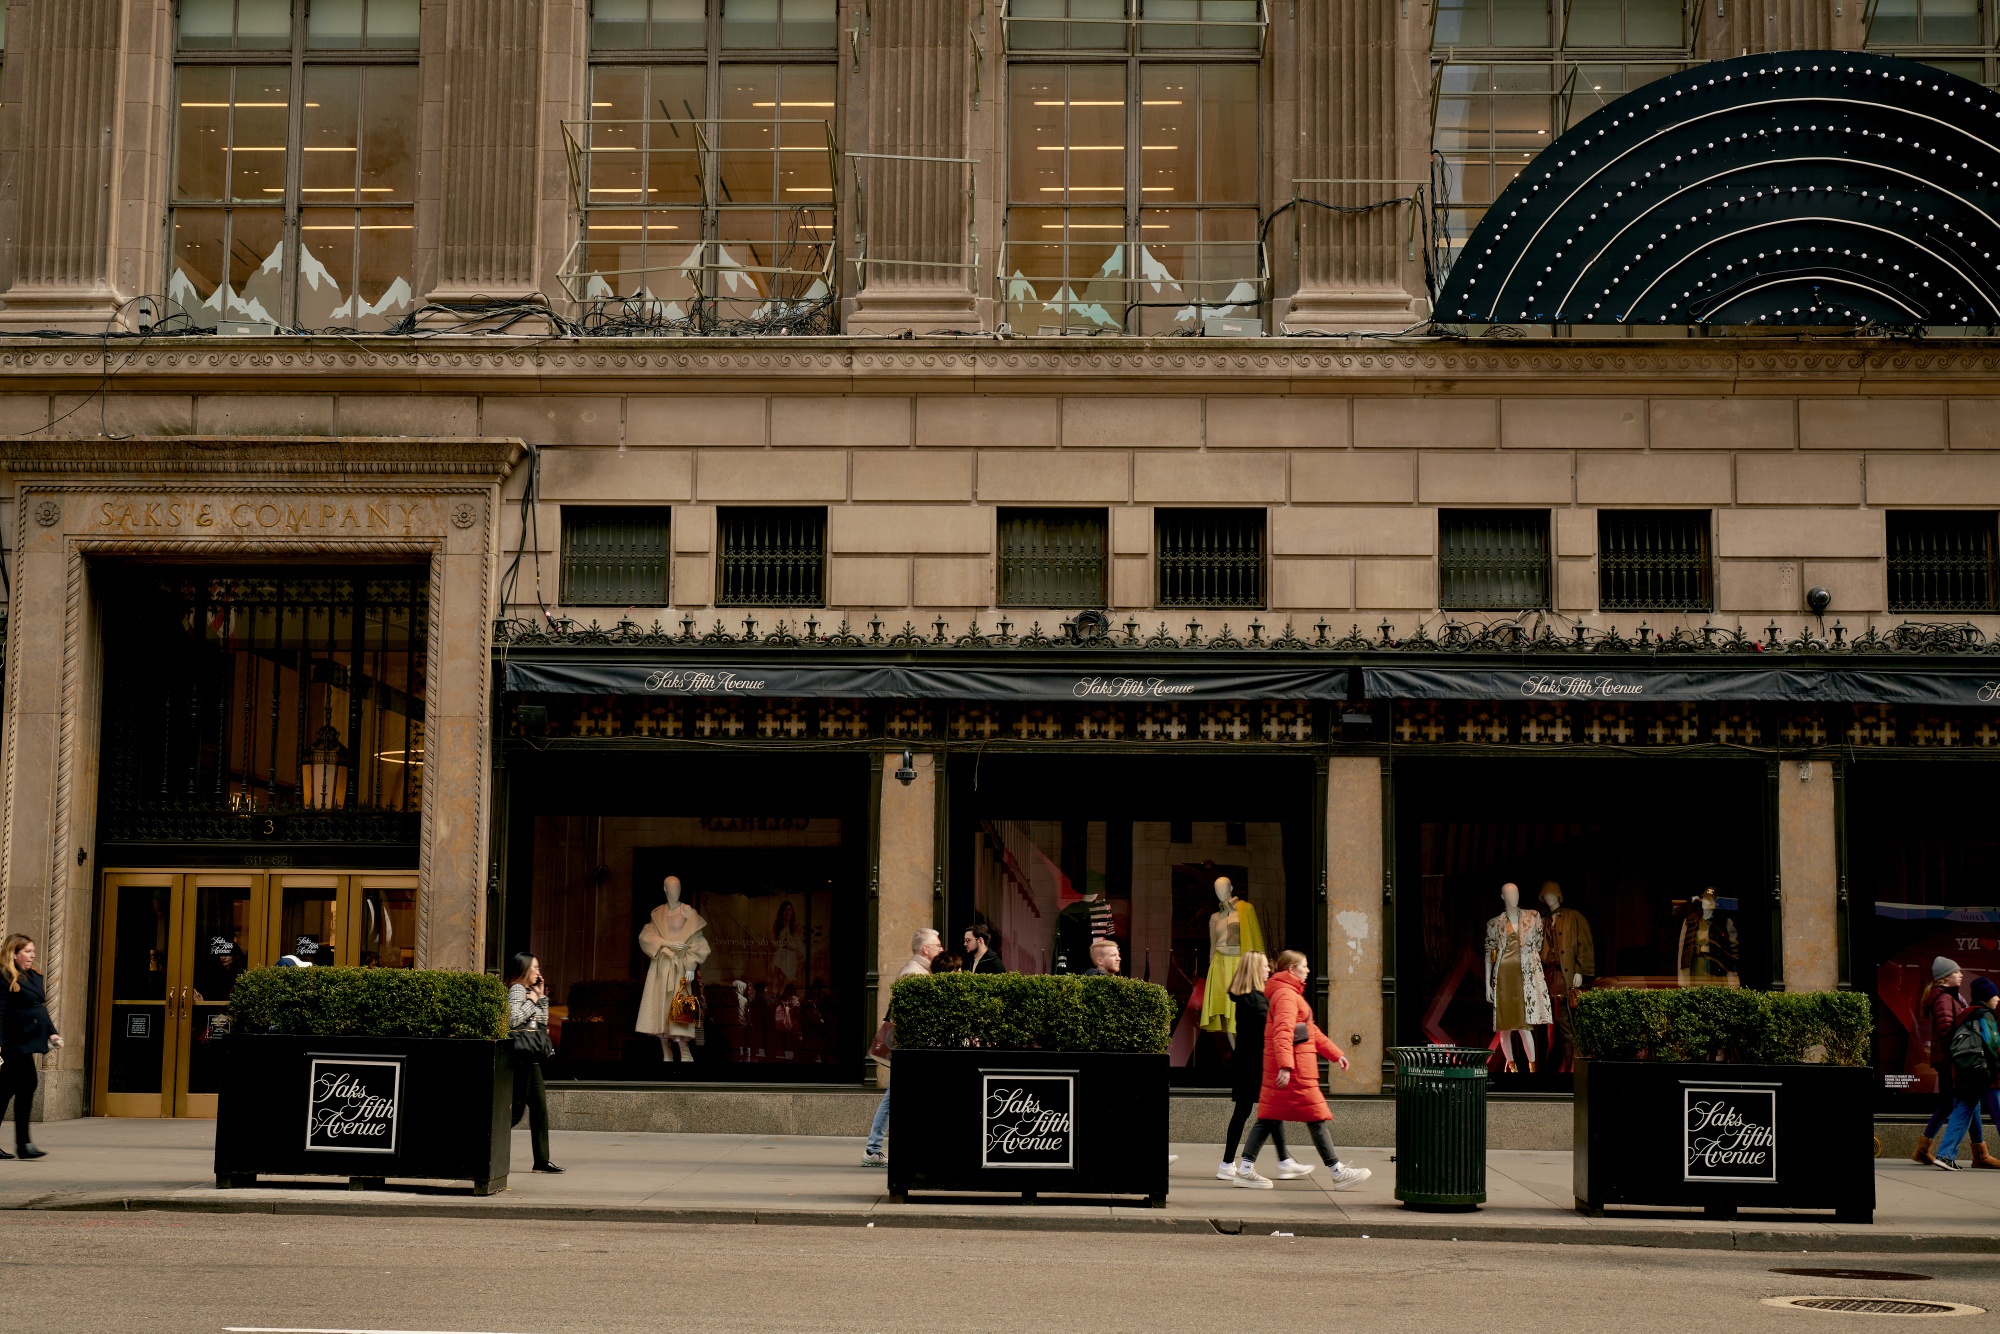 Saks Fifth Avenue opens new Manhattan store in bid to win luxury